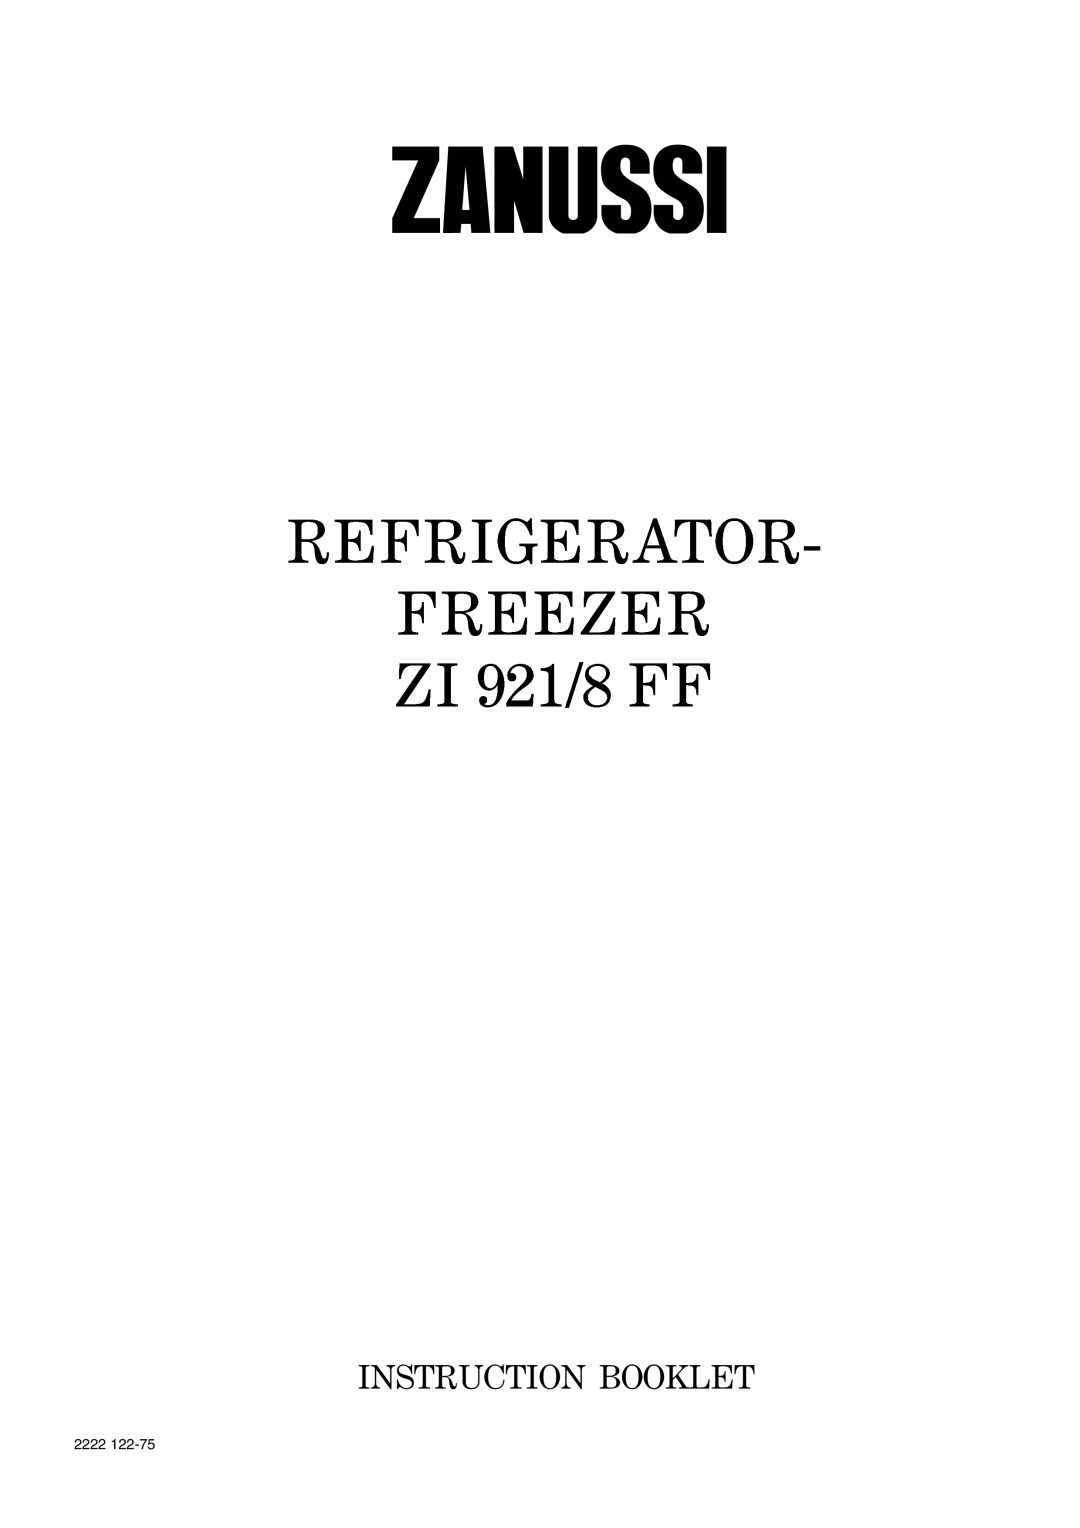 Zanussi manual REFRIGERATOR FREEZER ZI 921/8 FF, Instruction Booklet, 2222 